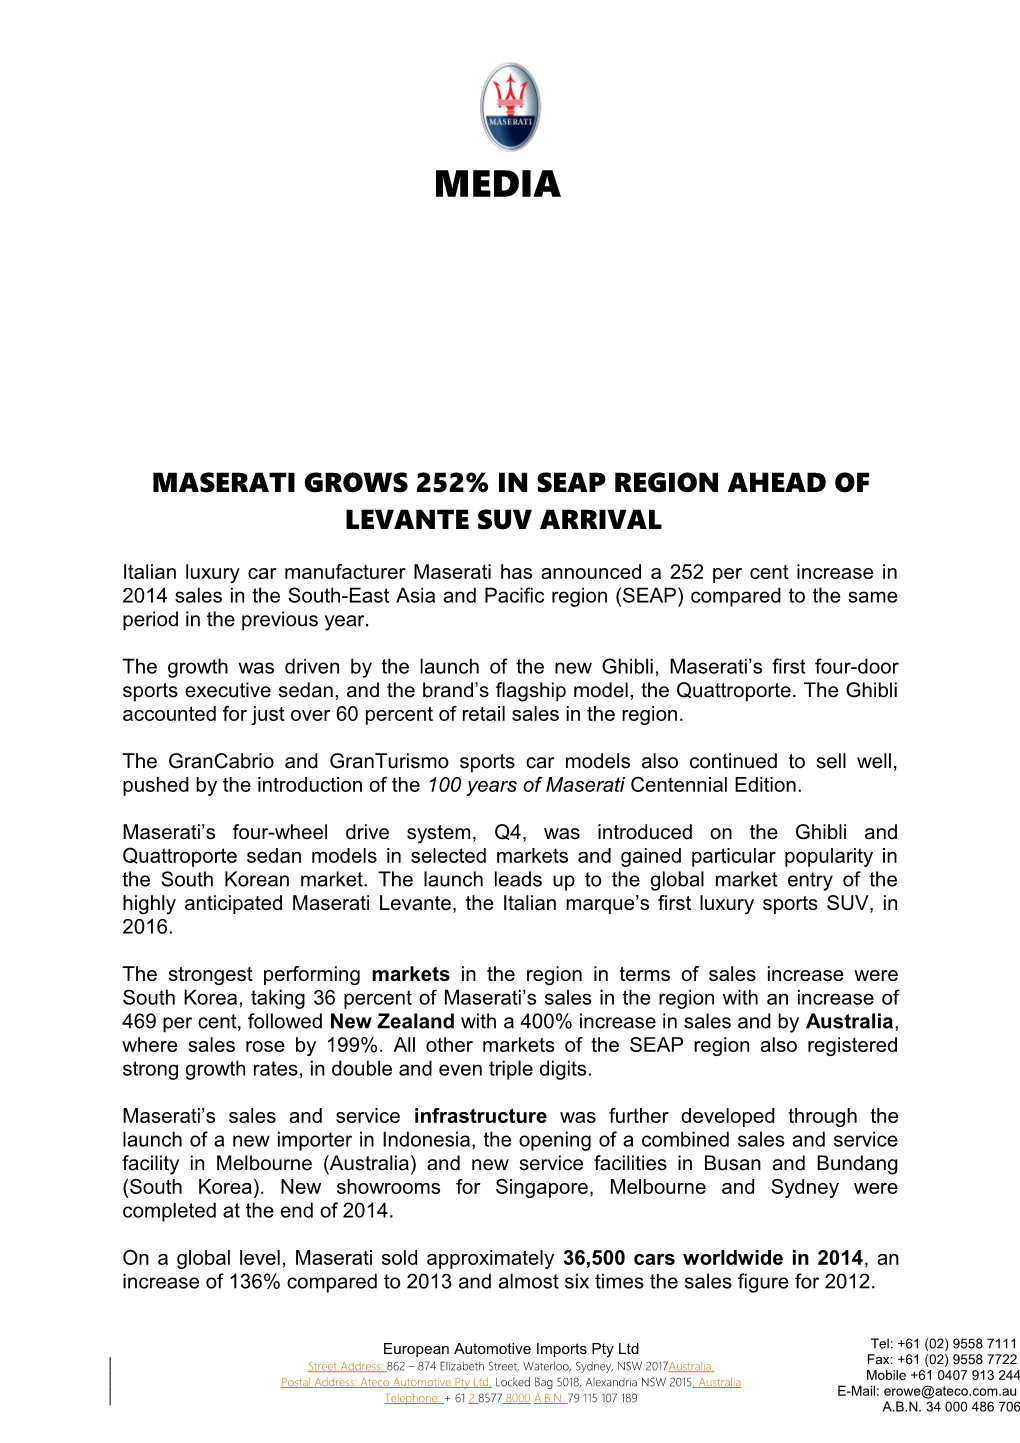 Maserati Grows 252% in SEAP Region Ahead of Levante SUV Arrival